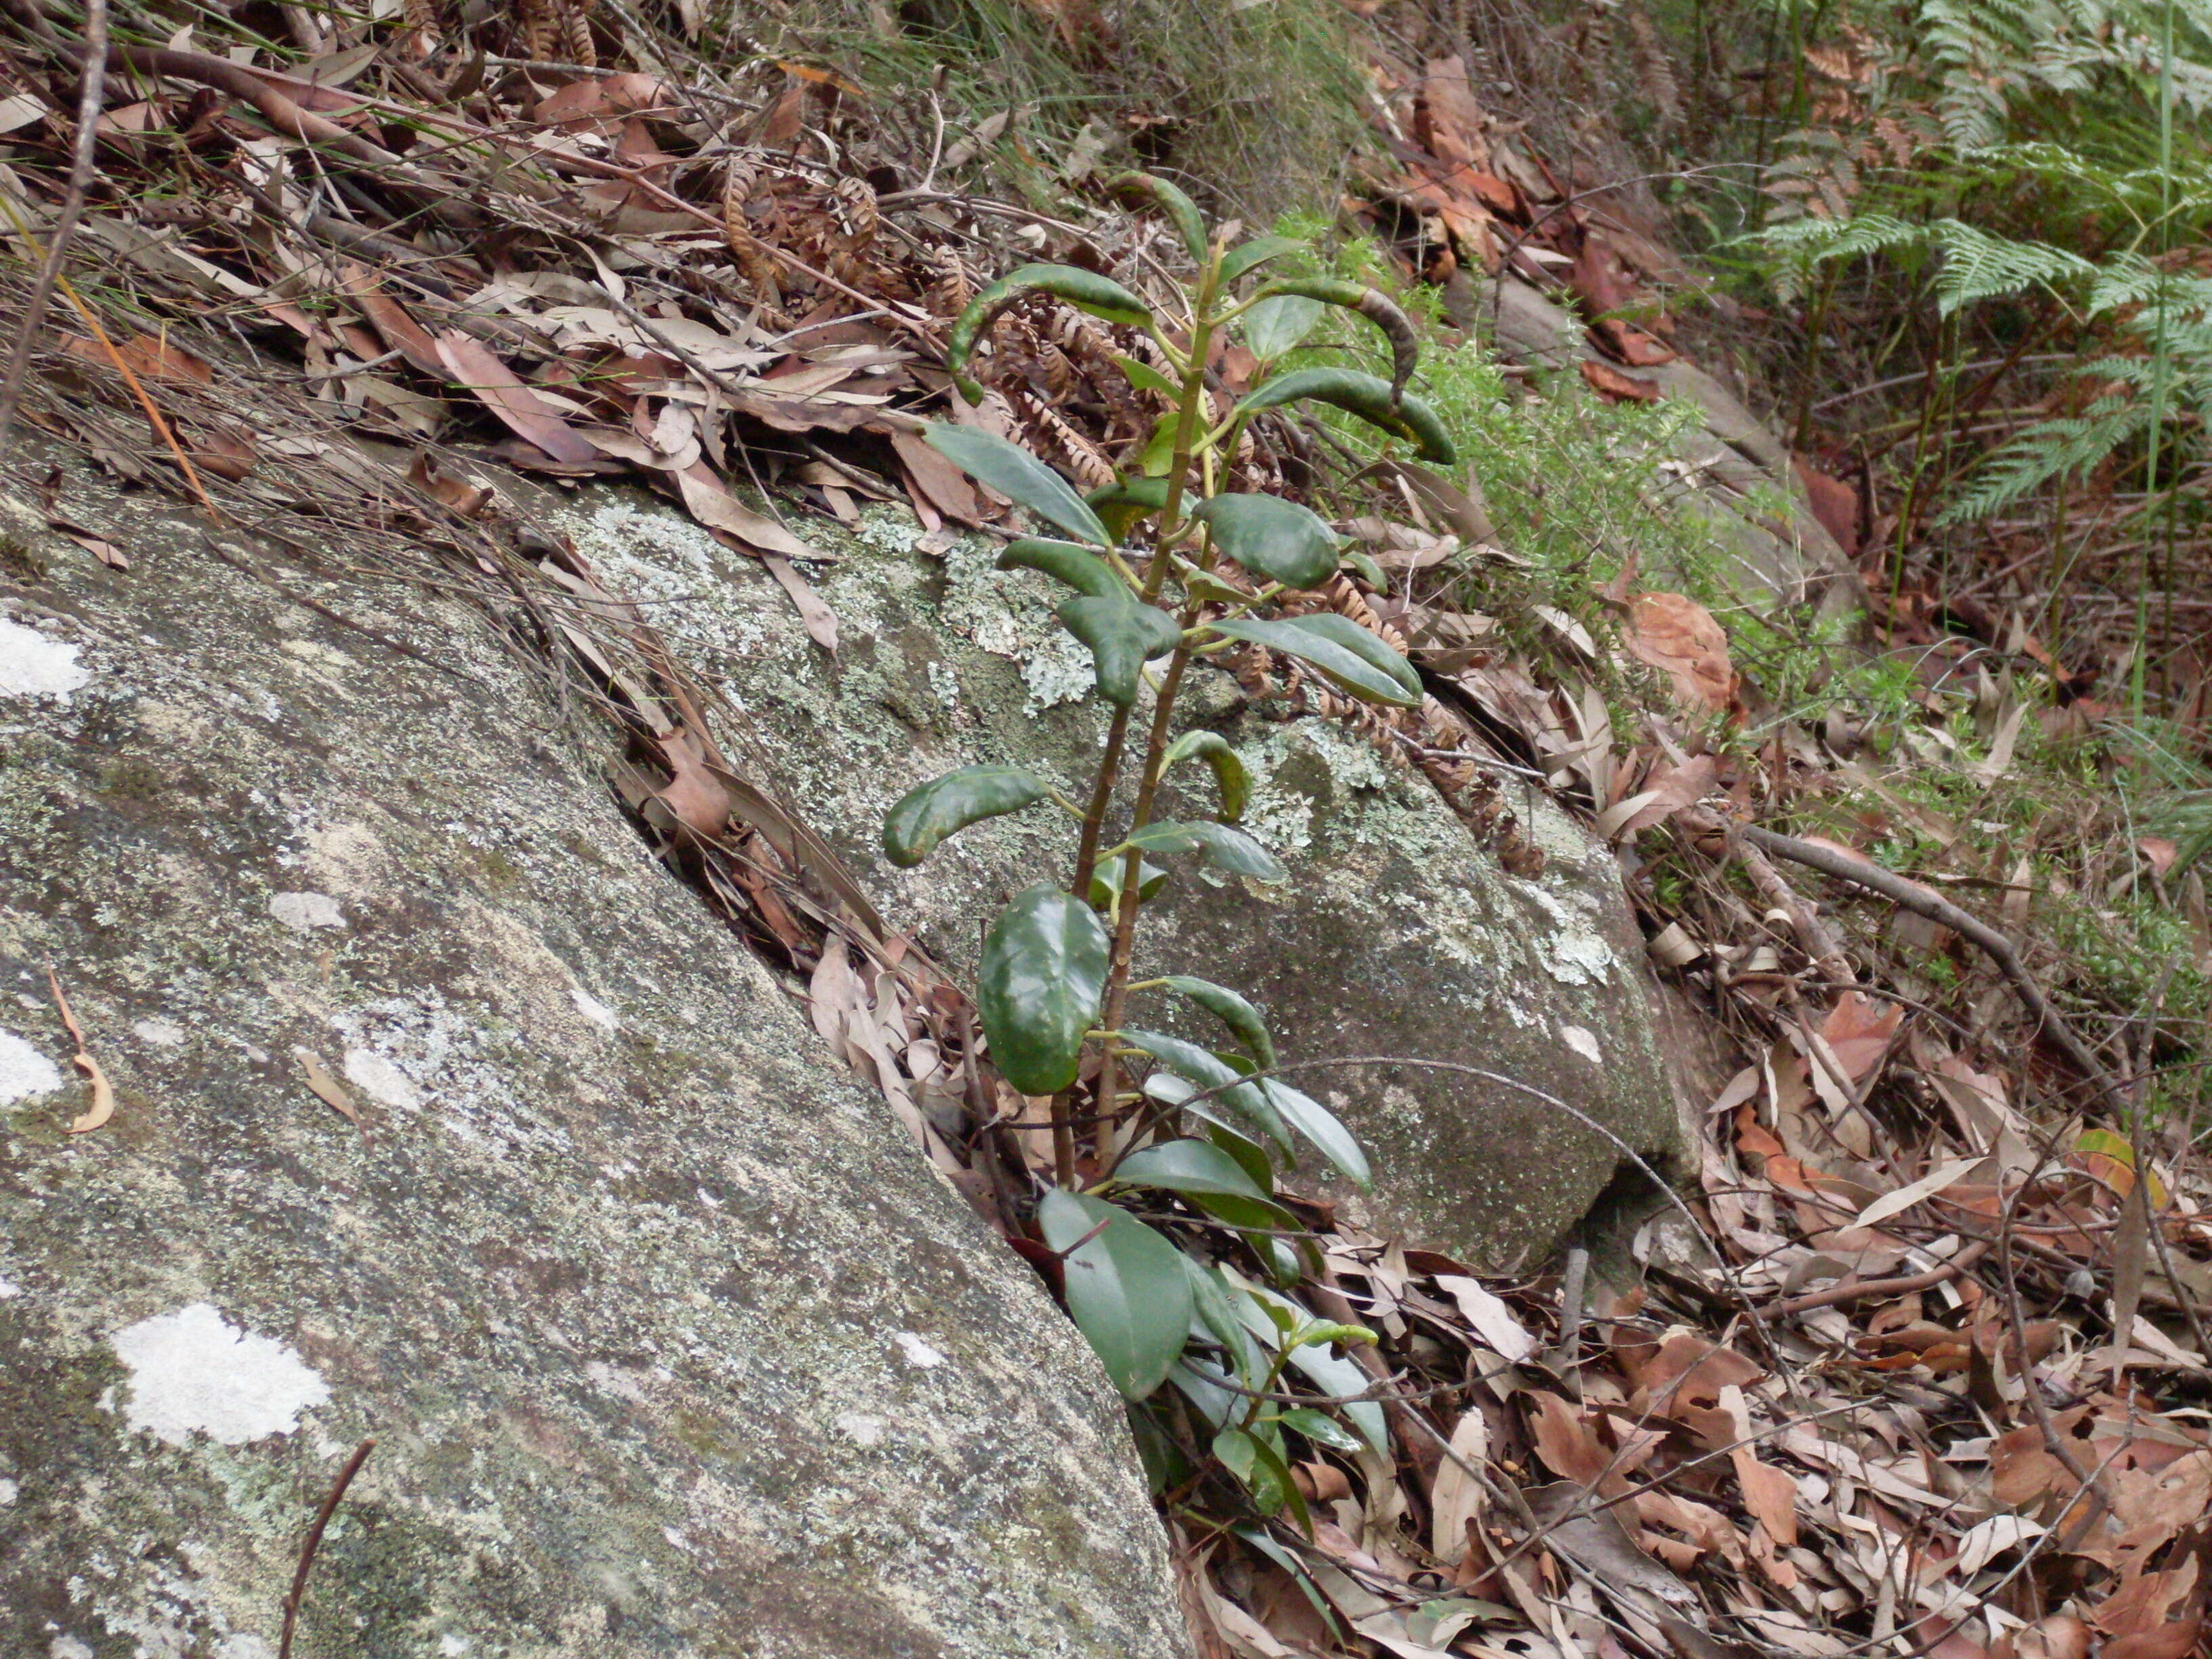 Image de Ficus rubiginosa Desf.